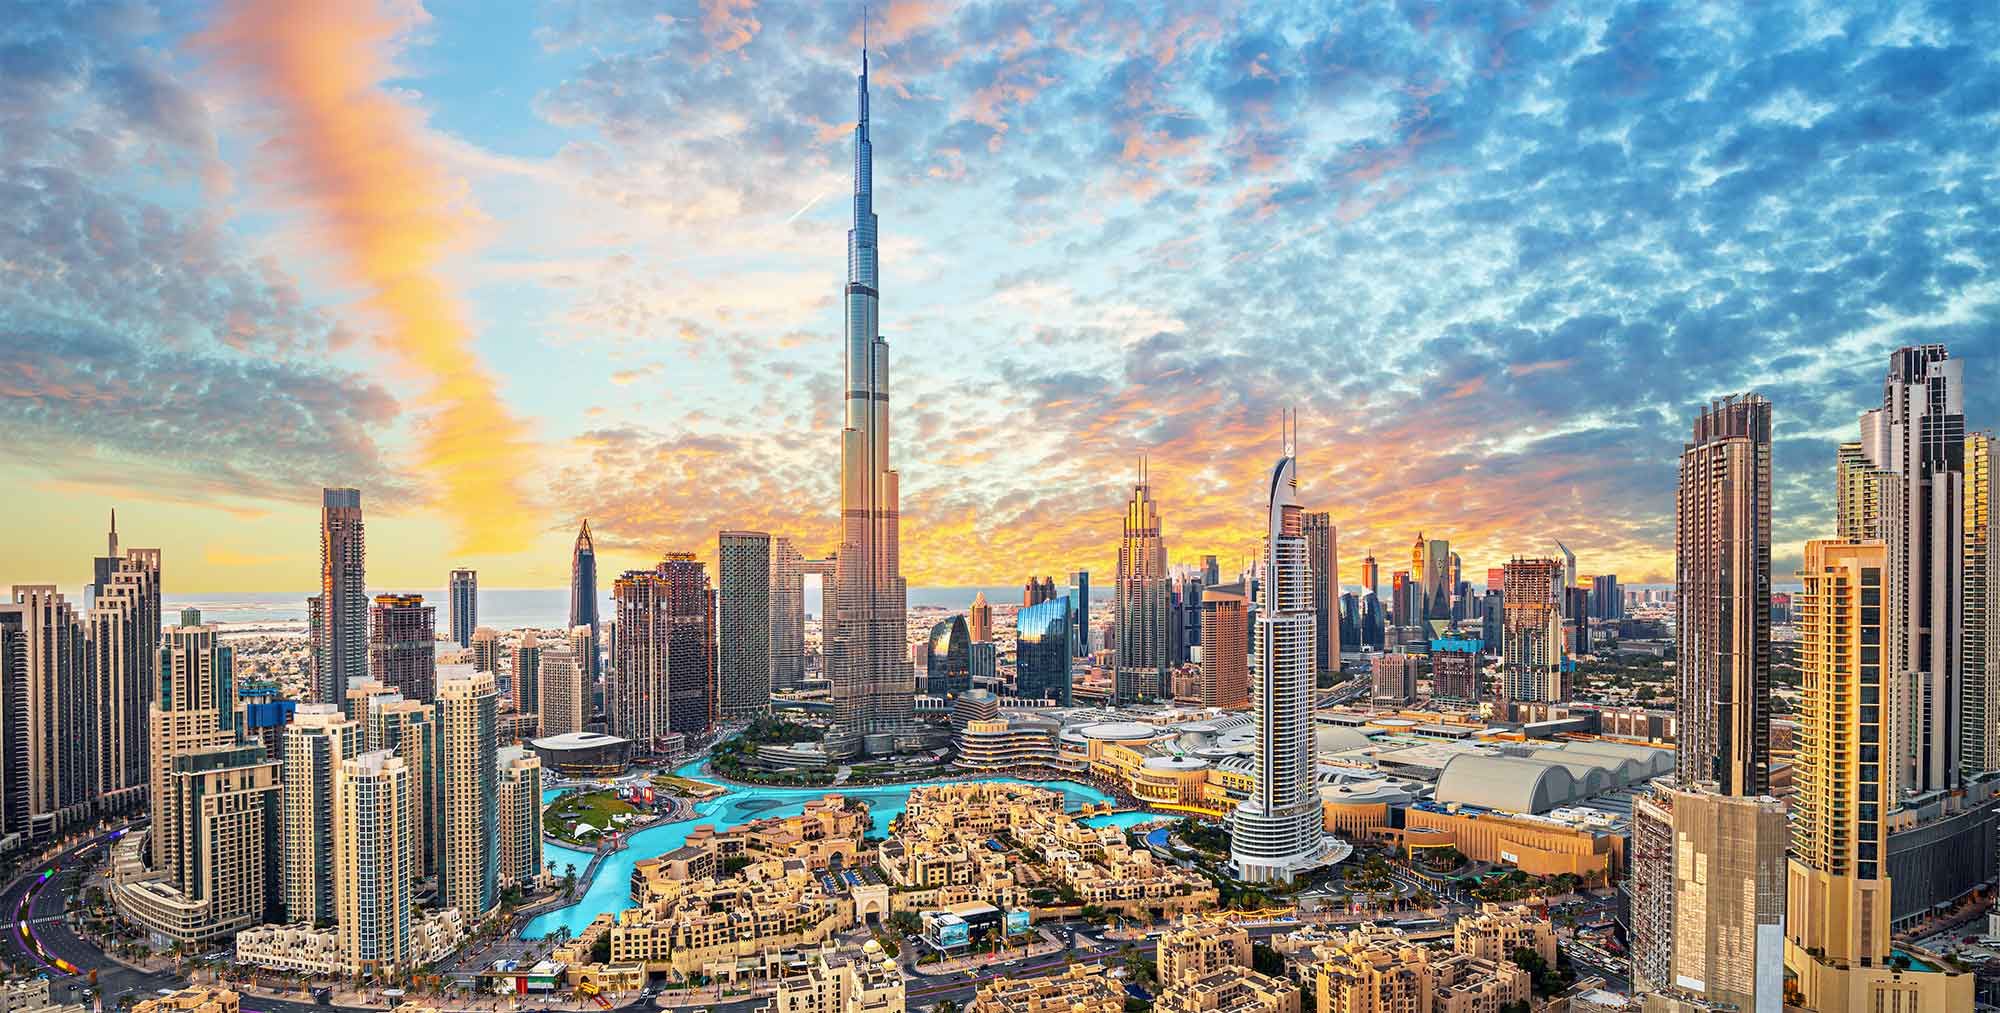 Dubai - Discover Burj Khalifa##Discover Palm Jumeirah##Discover Desert Safari